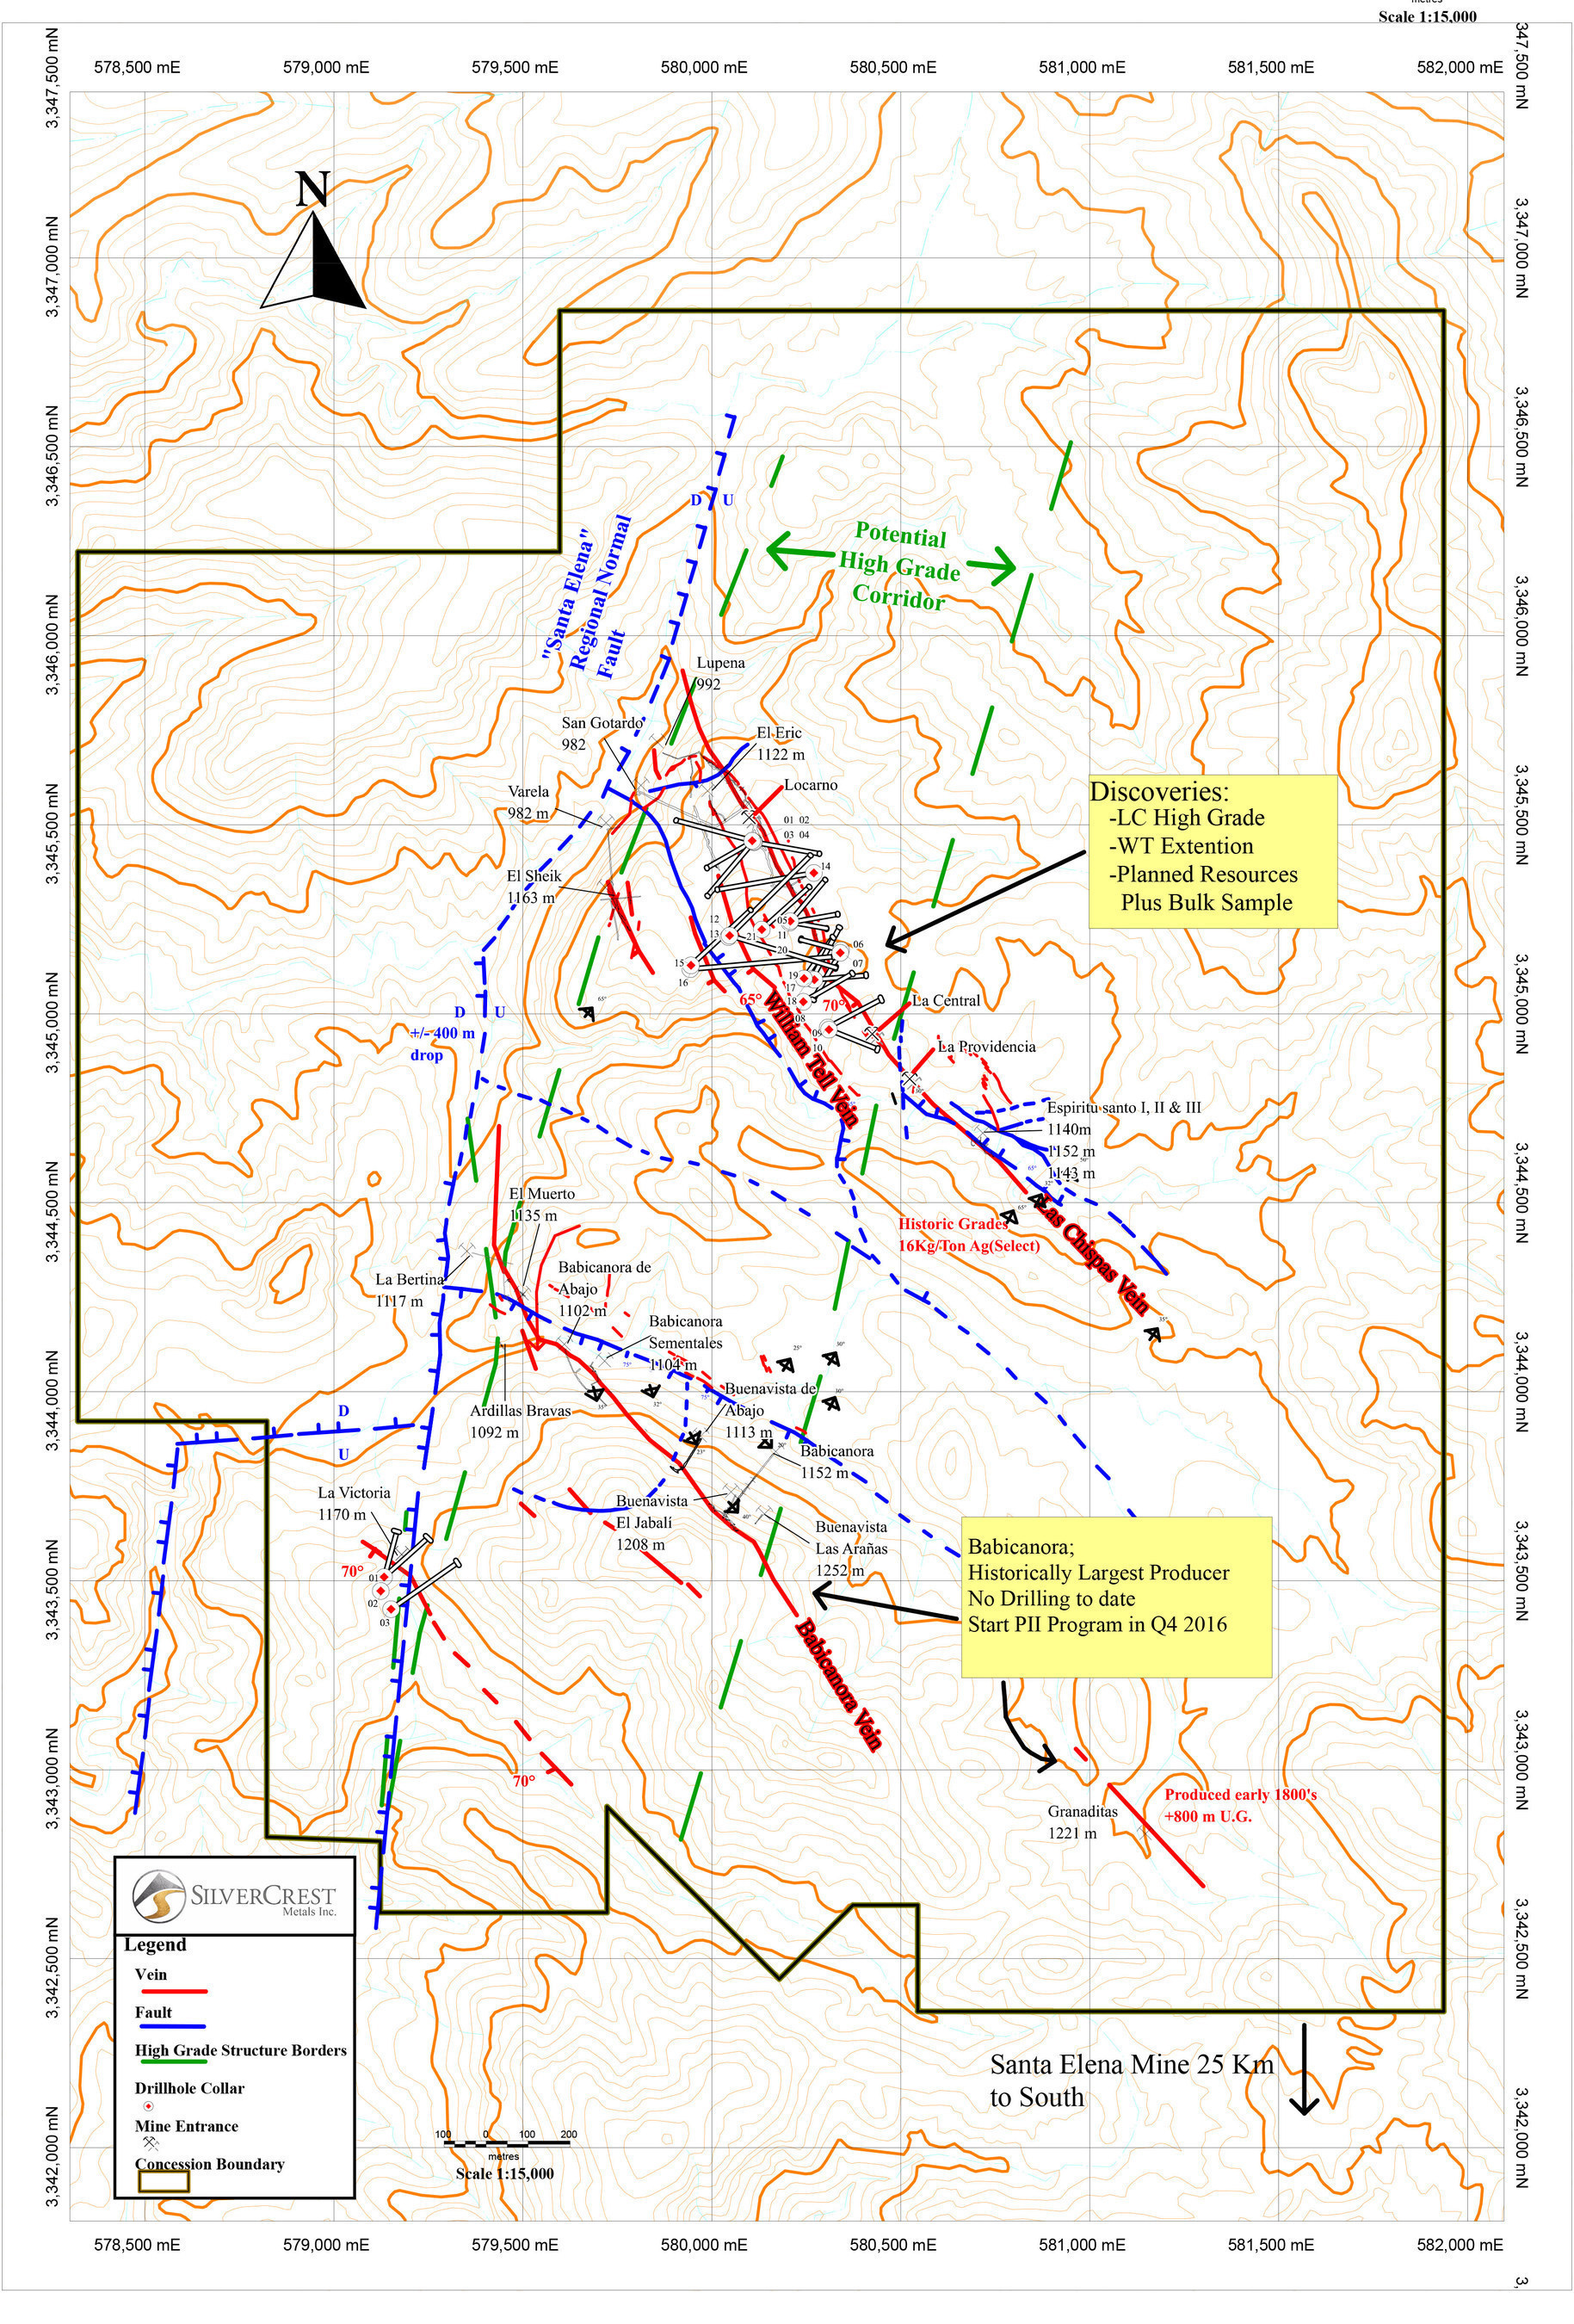 SilverCrest Metals Inc. Sonora, Mexico - Las Chispas Project - Figure 1 Las Chispas Wide Discovery Map